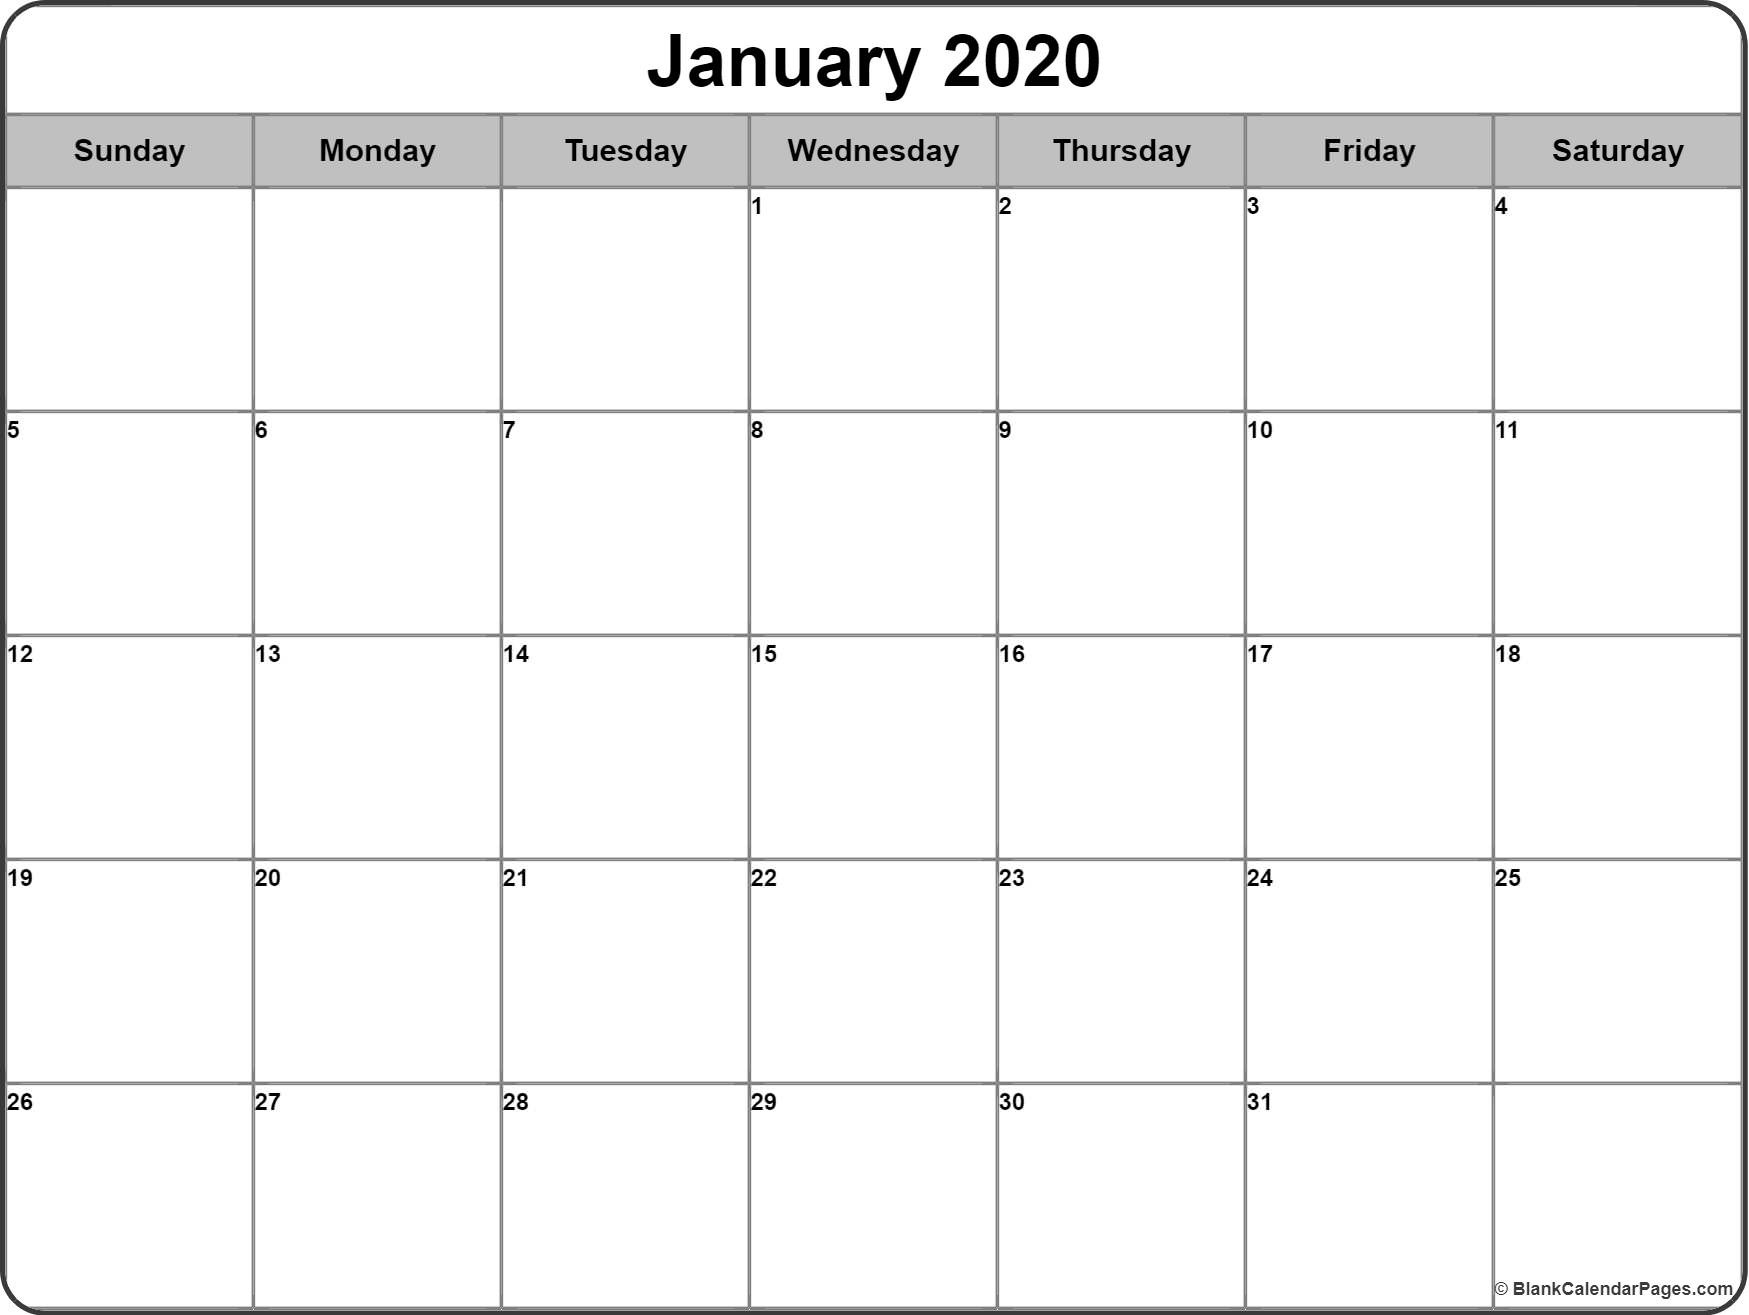 January 2020 Calendar | Free Printable Monthly Calendars-Show January 2020 Calendar